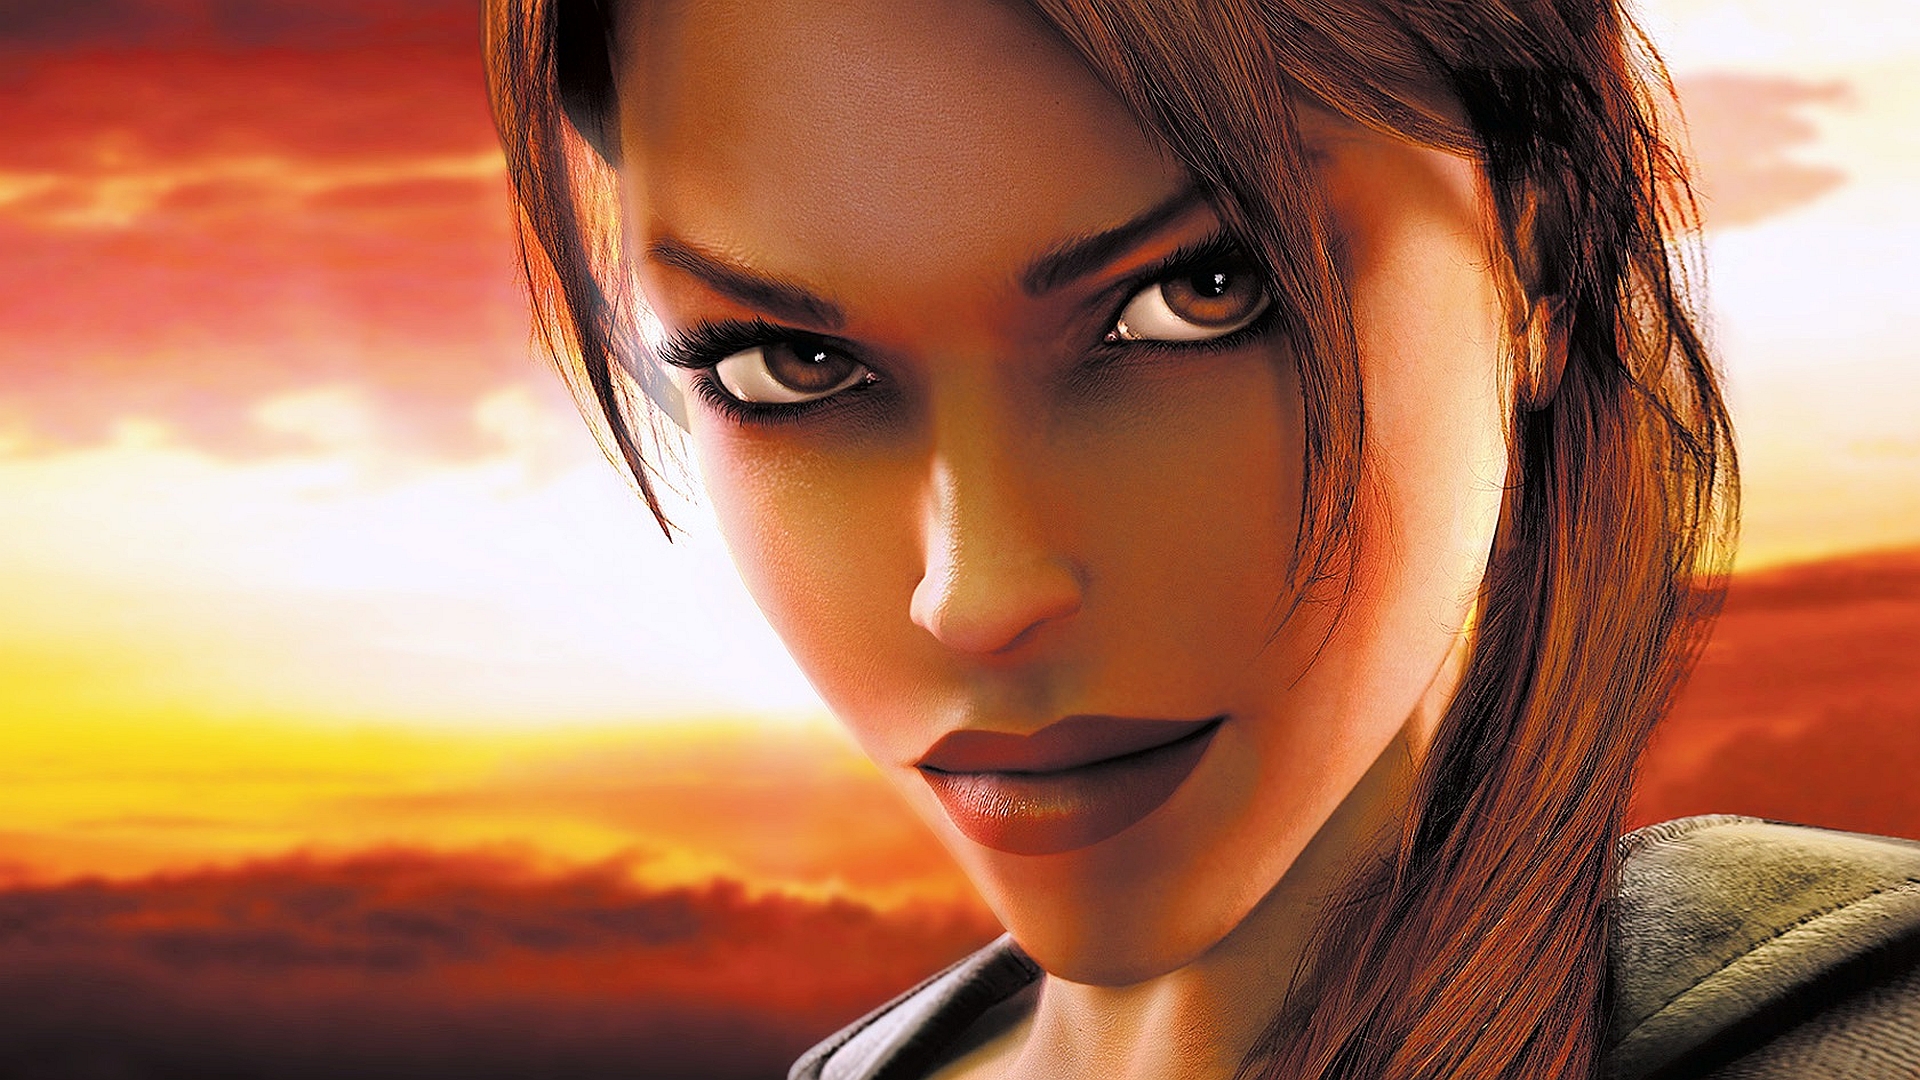 Lara Croft apoia Lara Croft: Jolie leva filhos para ver novo Tomb Raider  - 19/03/2018 - UOL Entretenimento